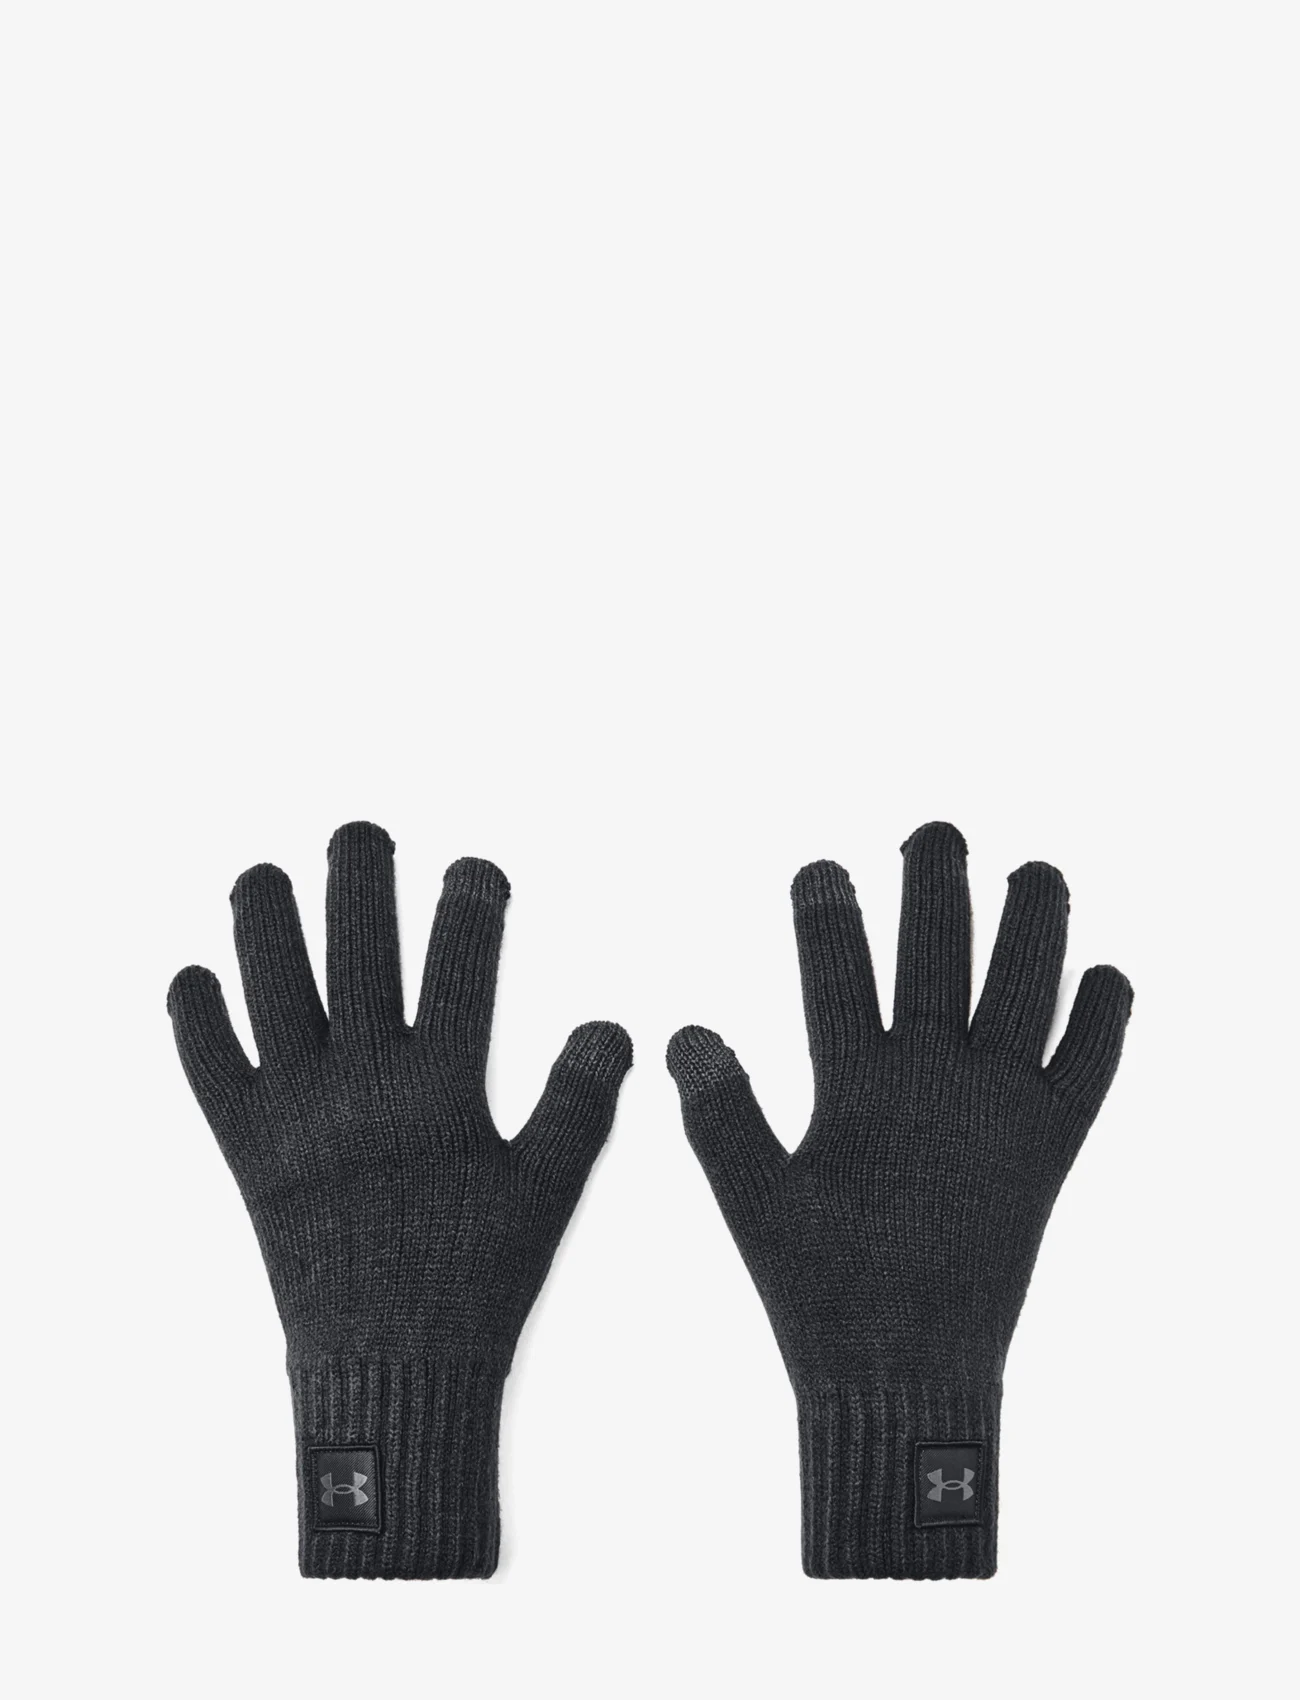 Under Armour - UA Halftime Gloves - laagste prijzen - black - 1